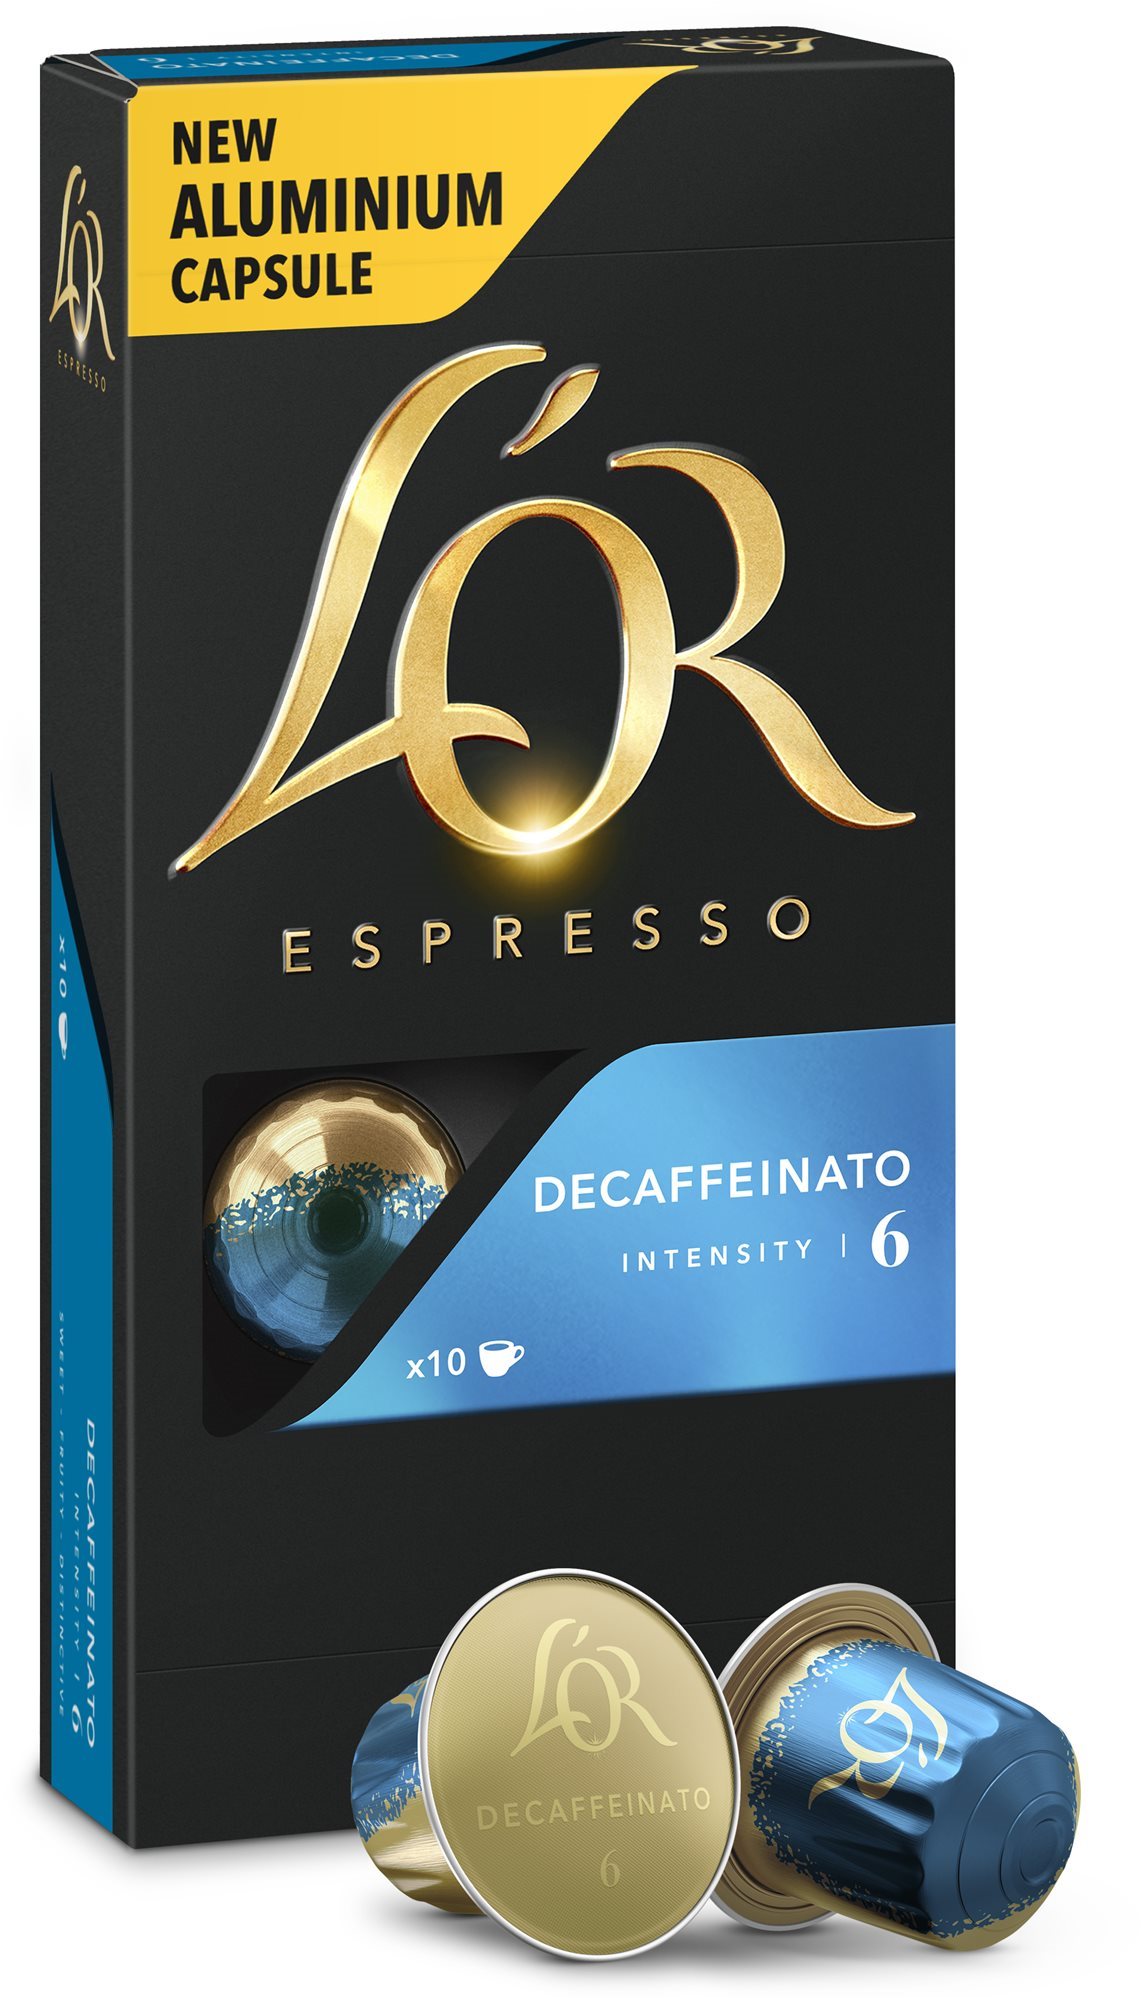 L'OR Espresso Decaffeinato 10 db, alumínium